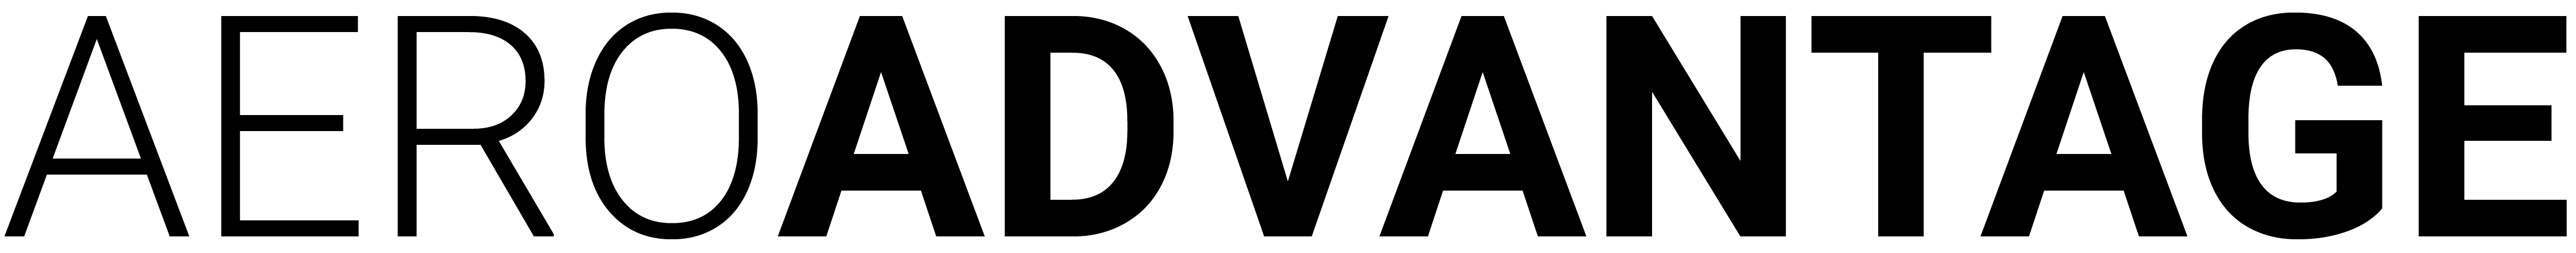 AVFG - AeroAdvantage Logo - Black